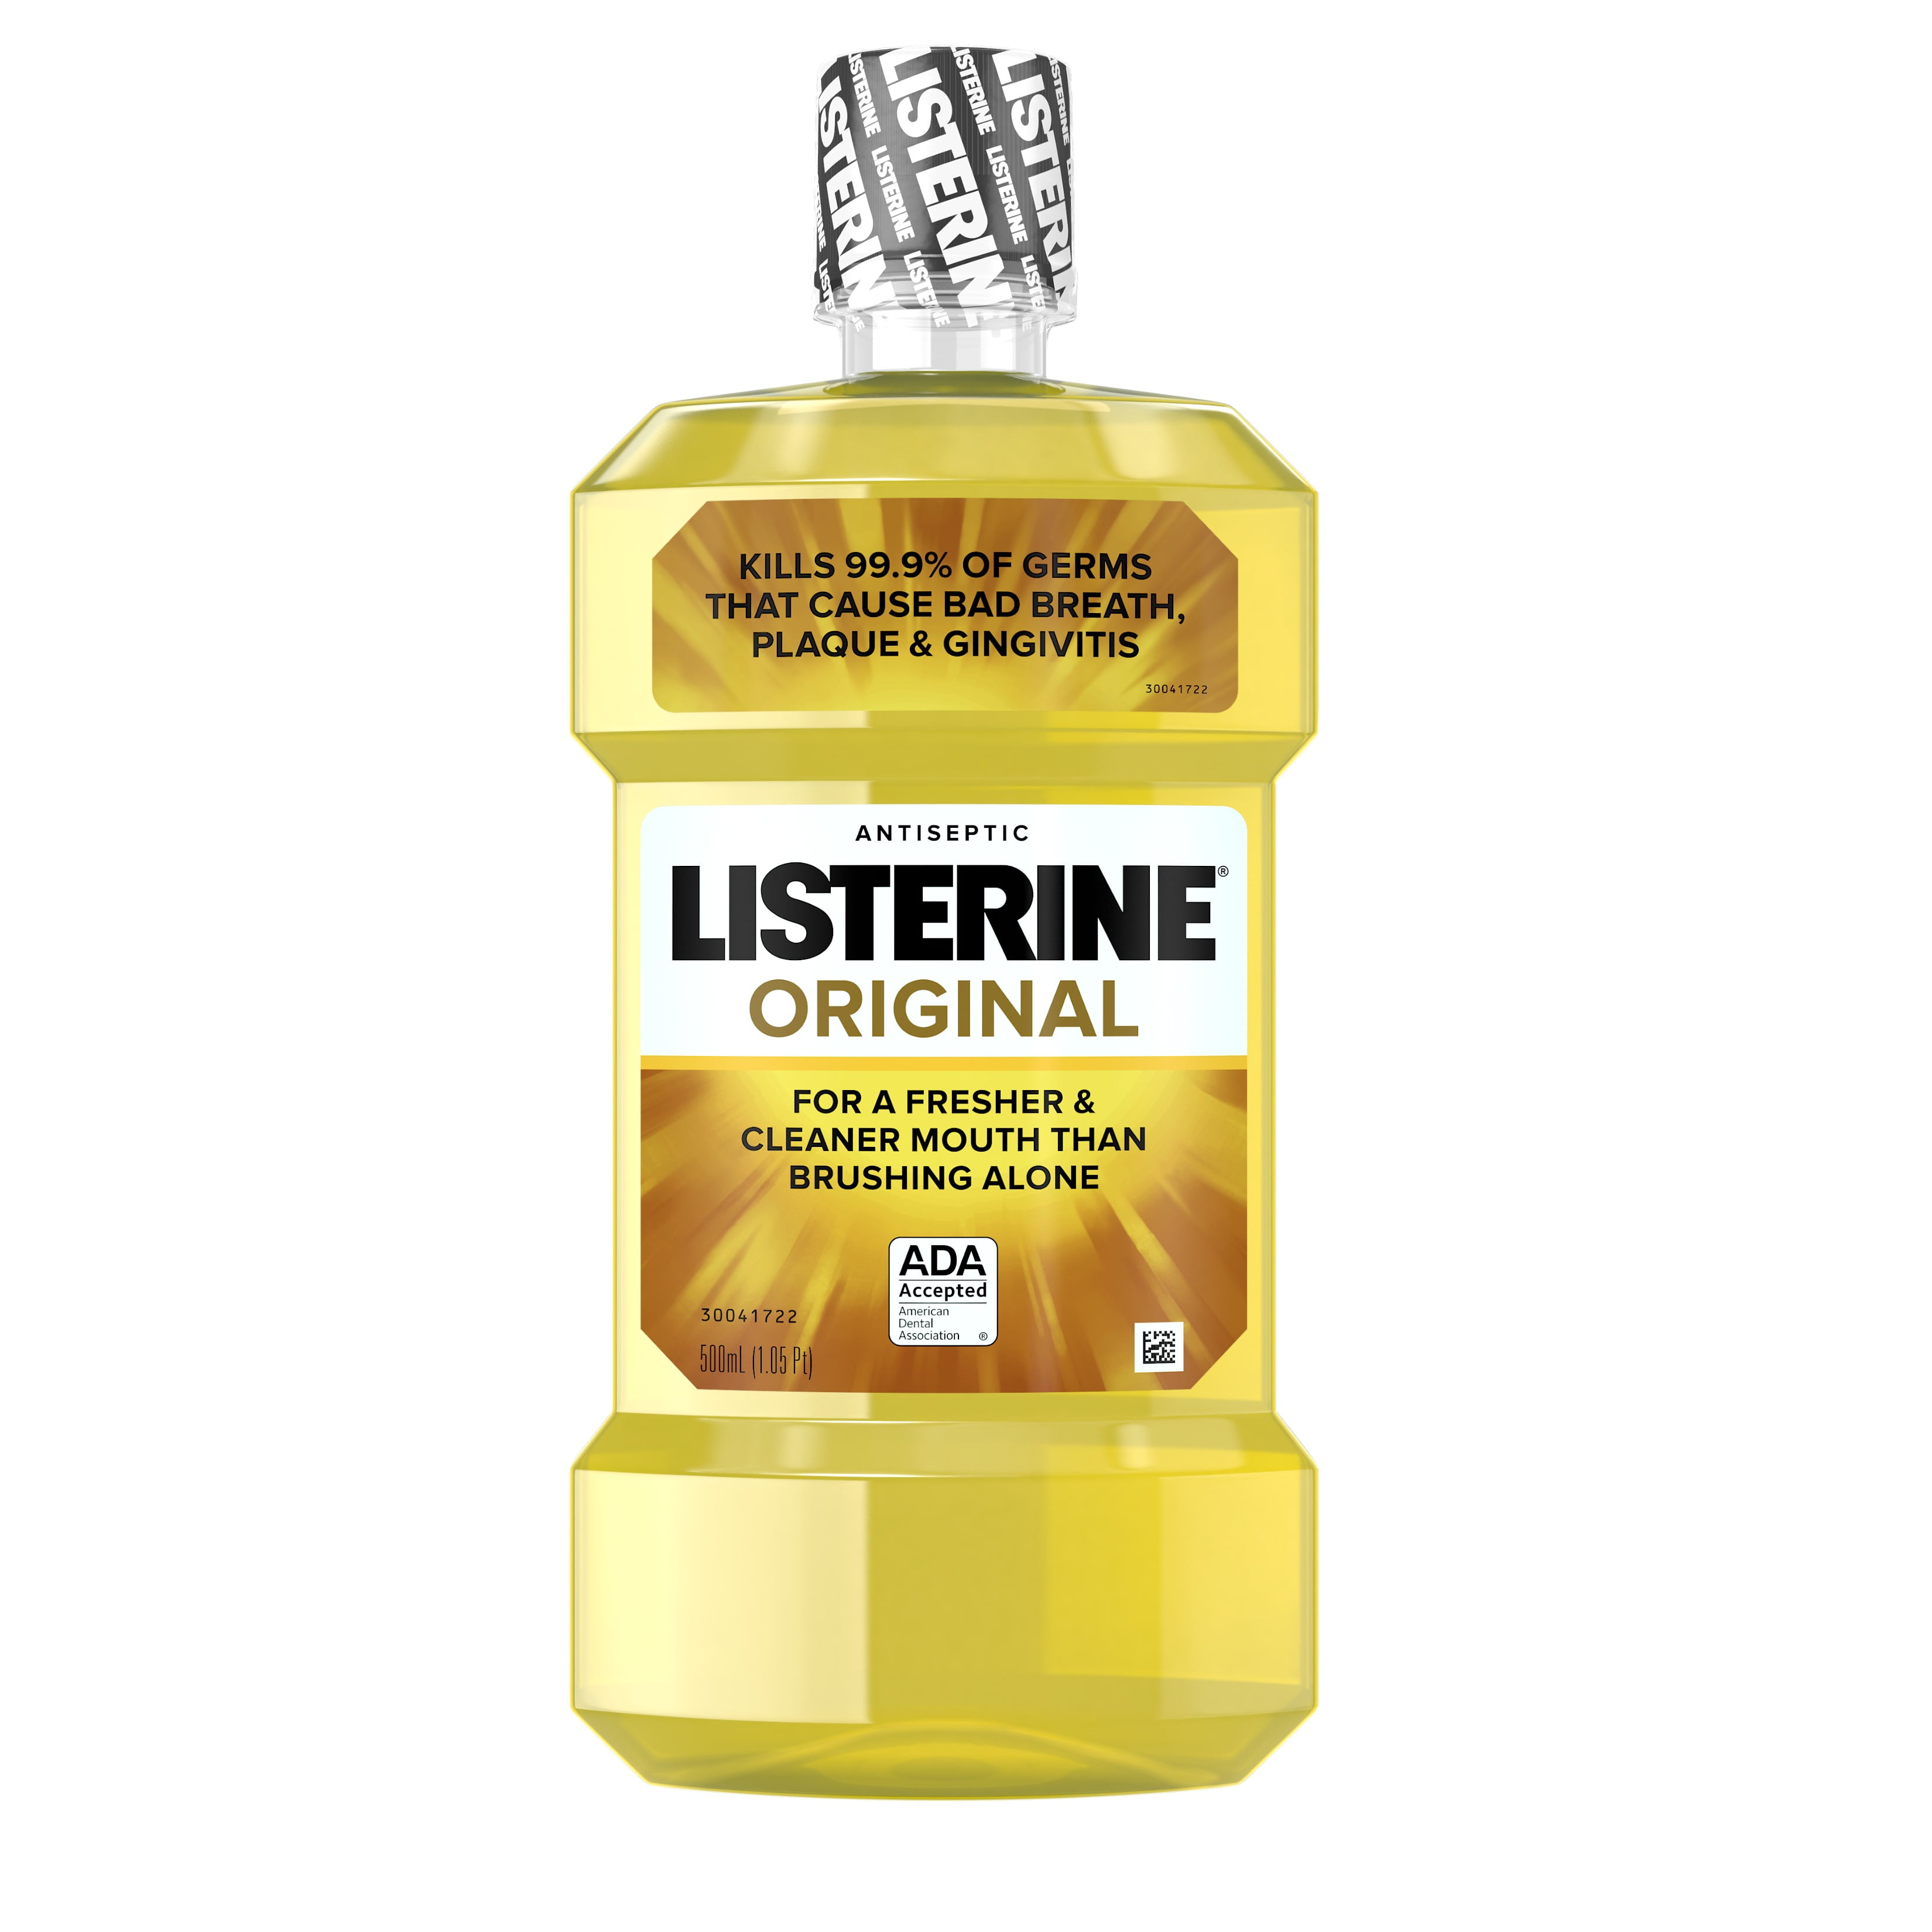 Listerine Original Antiseptic Oral Care Mouthwash 500 Ml